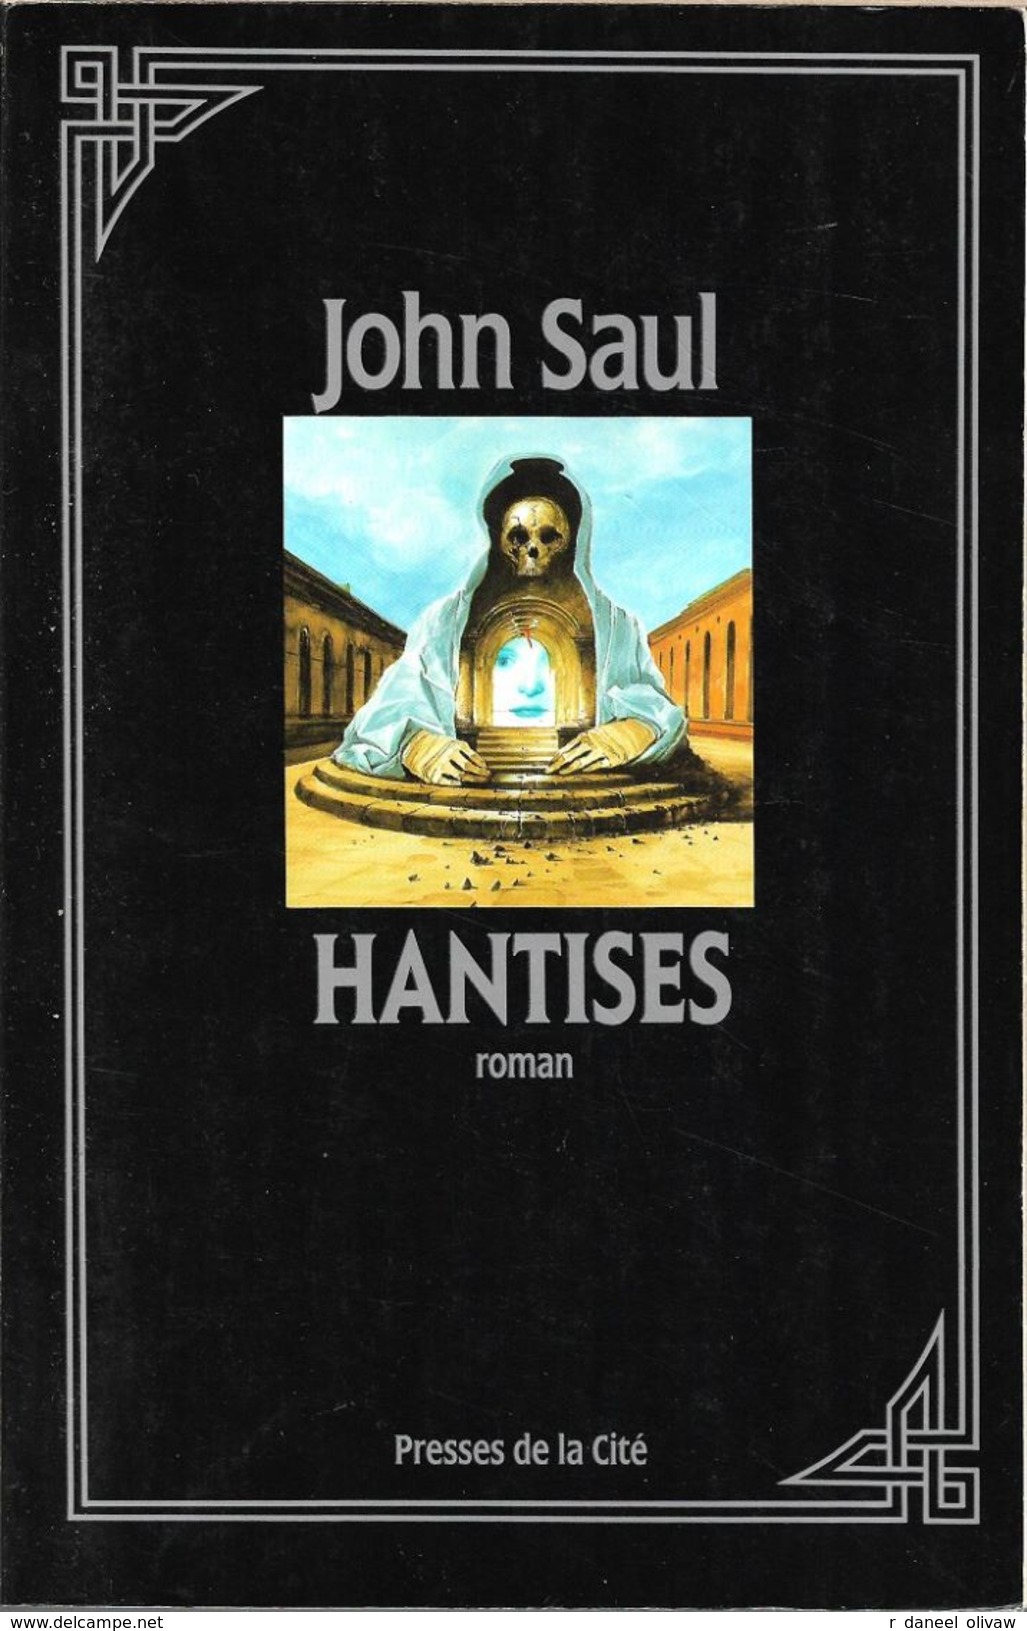 Presses De La Cité - SAUL, John - Hantises (TBE) - Presses De La Cité